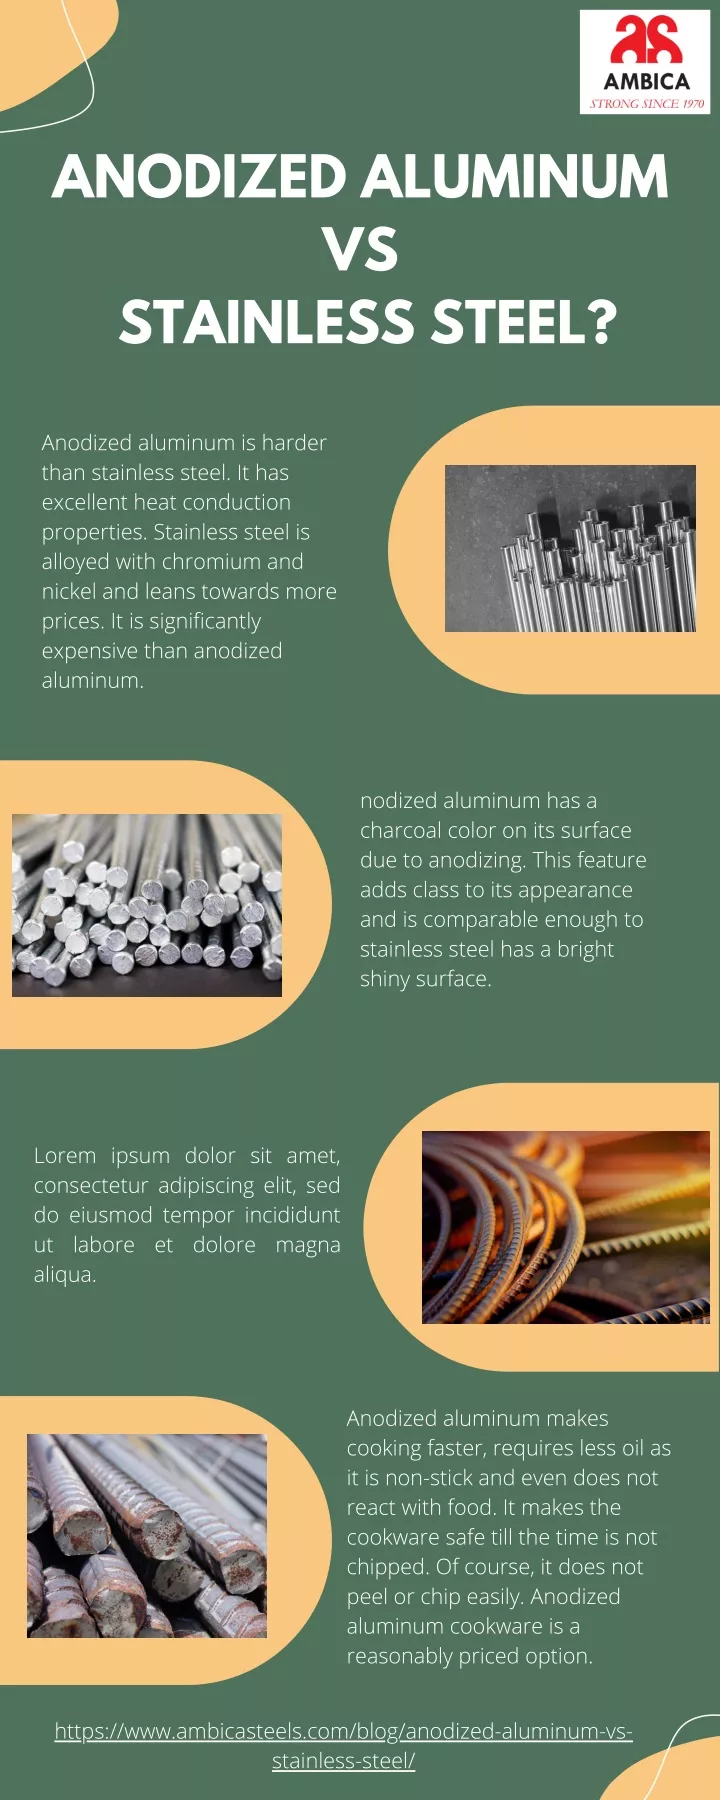 anodized aluminum vs stainless steel